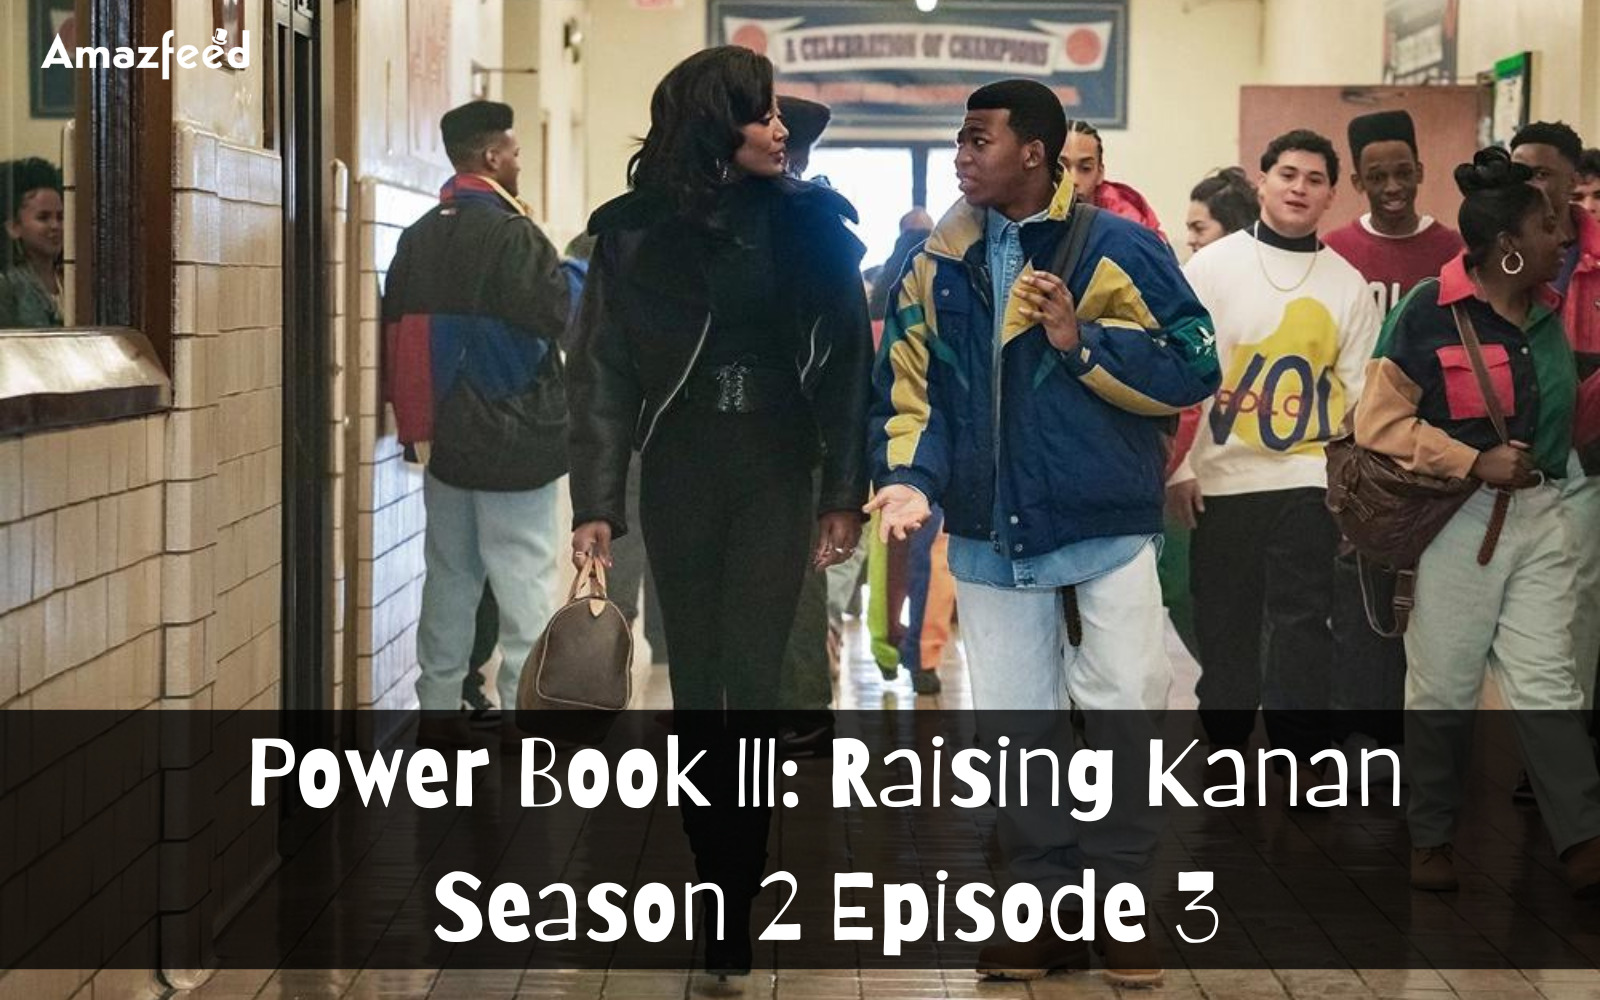 Power Book III: Raising Kanan Season 2 Episode 3 "Sleeping Dogs - Power Book 3 Date De Sortie